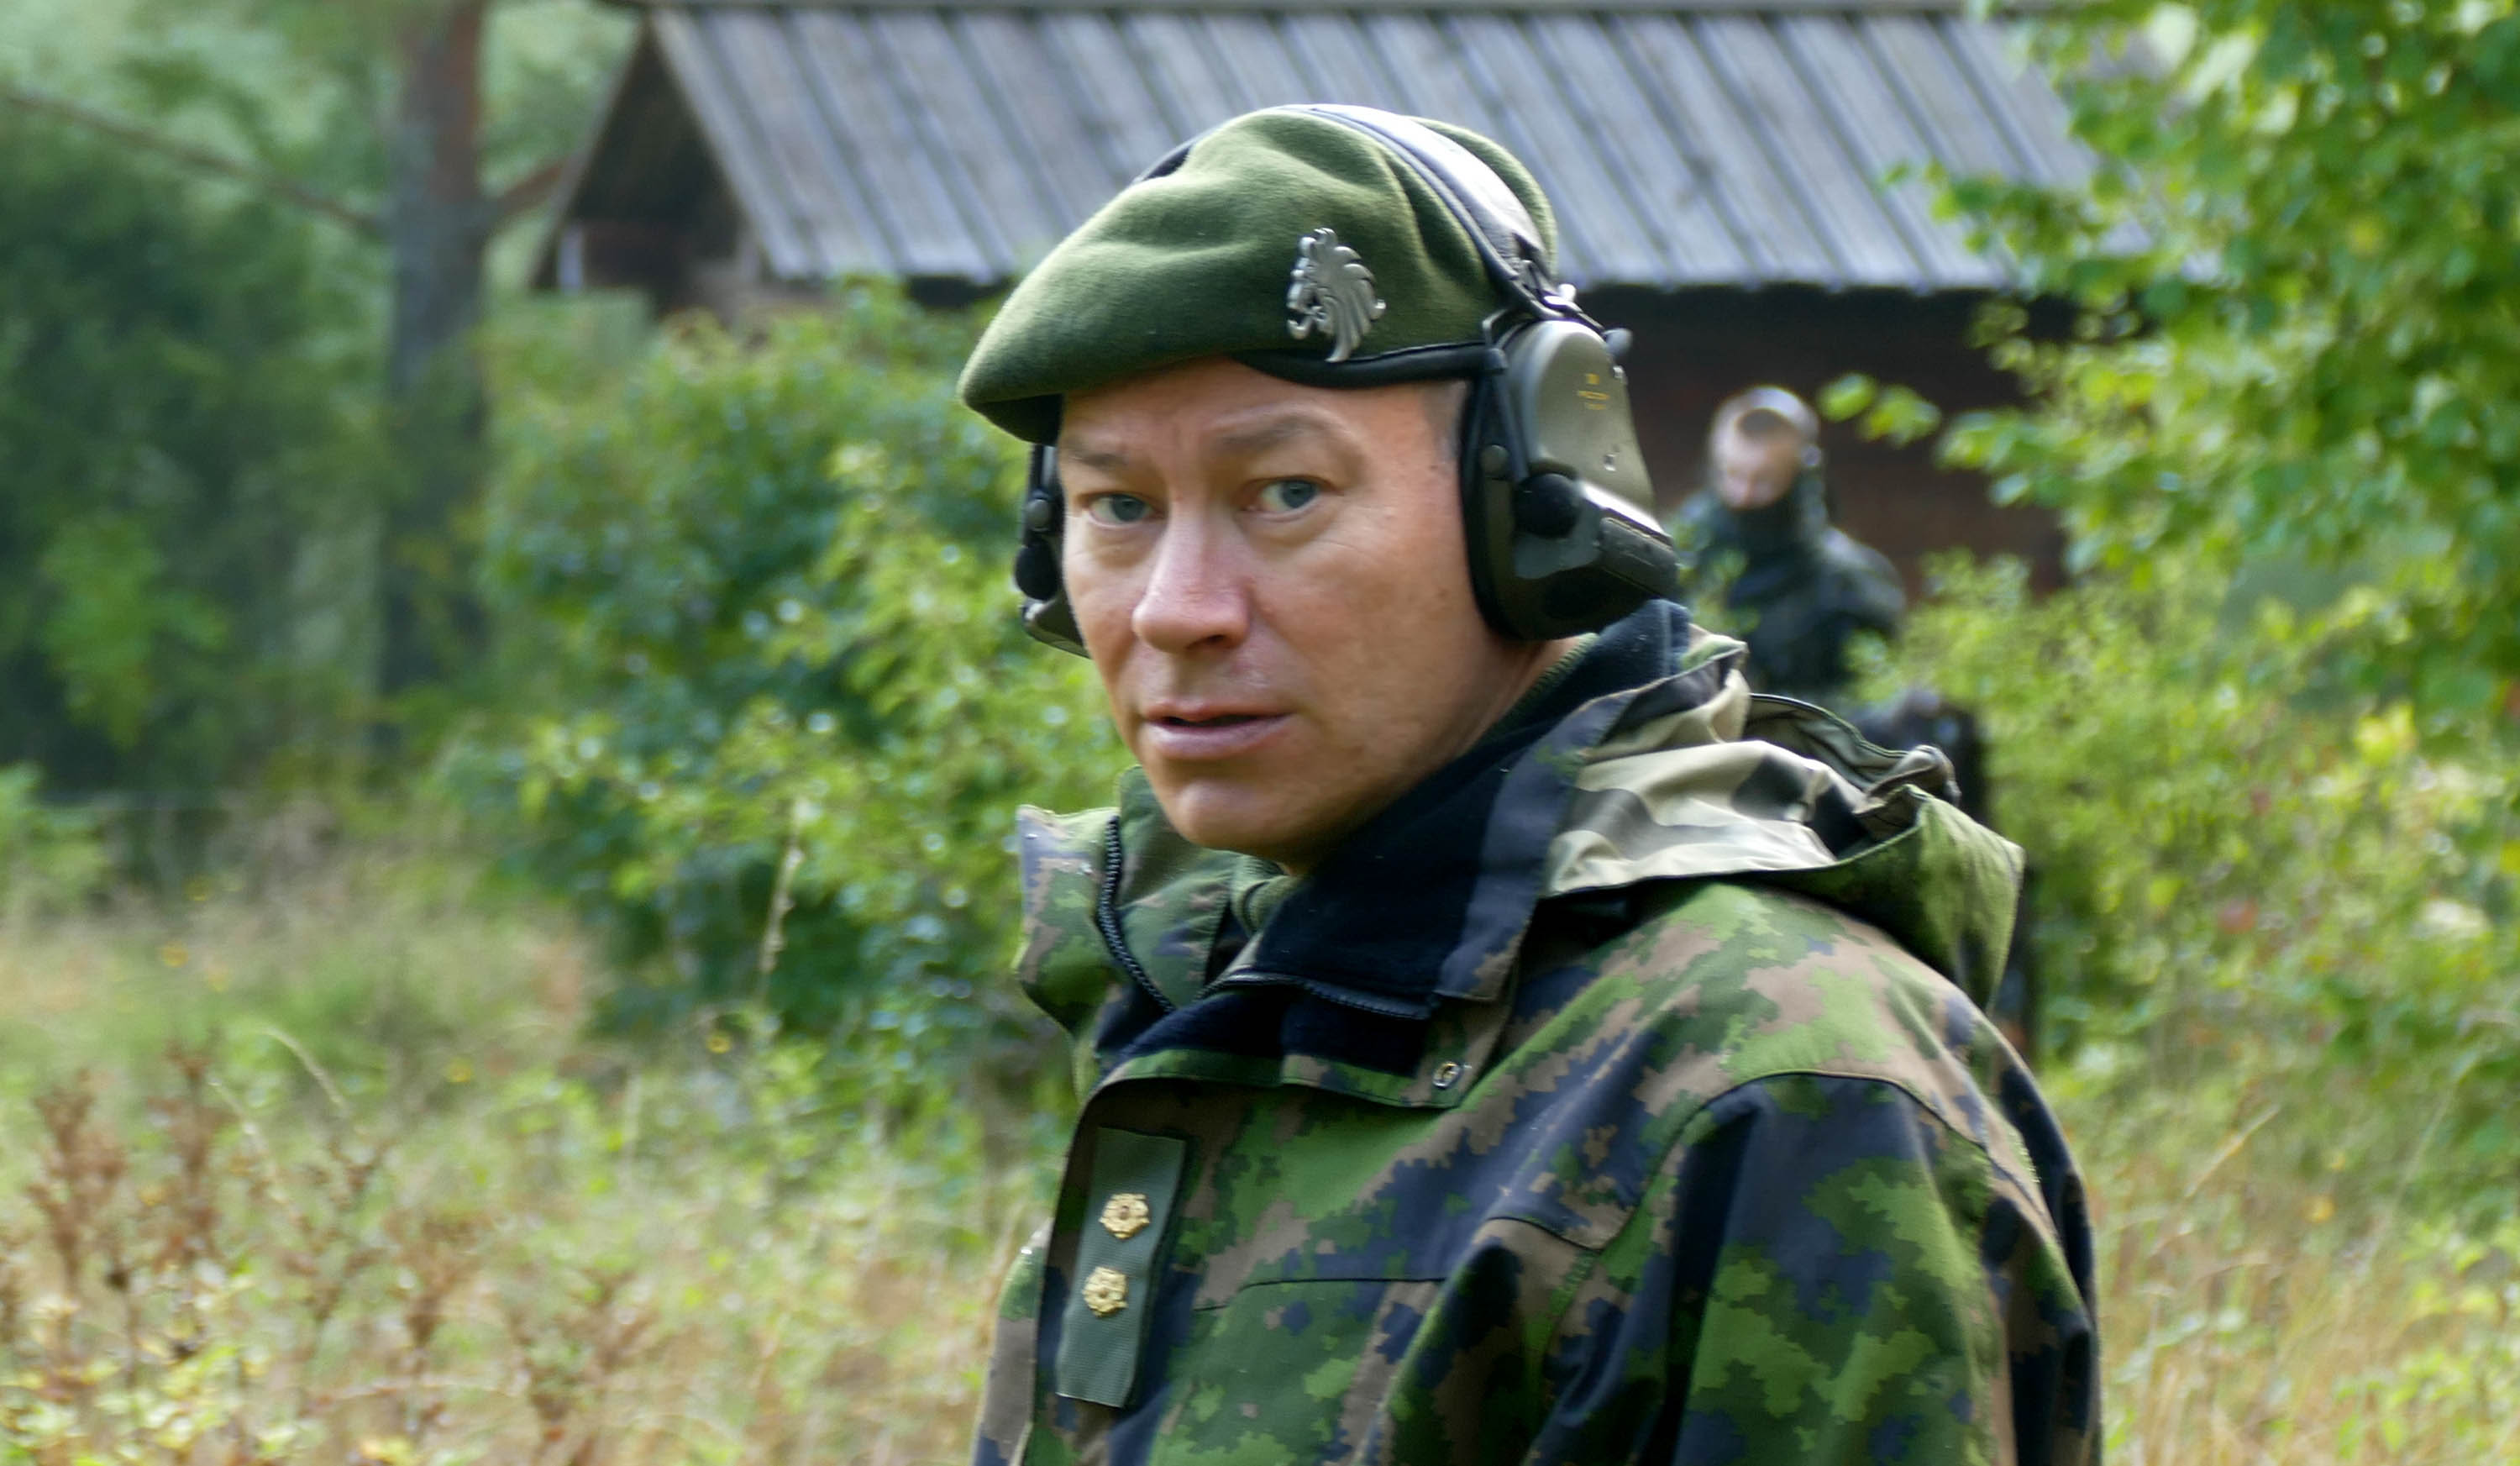 Oberstlöjtnant Tapio Huhtamella i utbildning